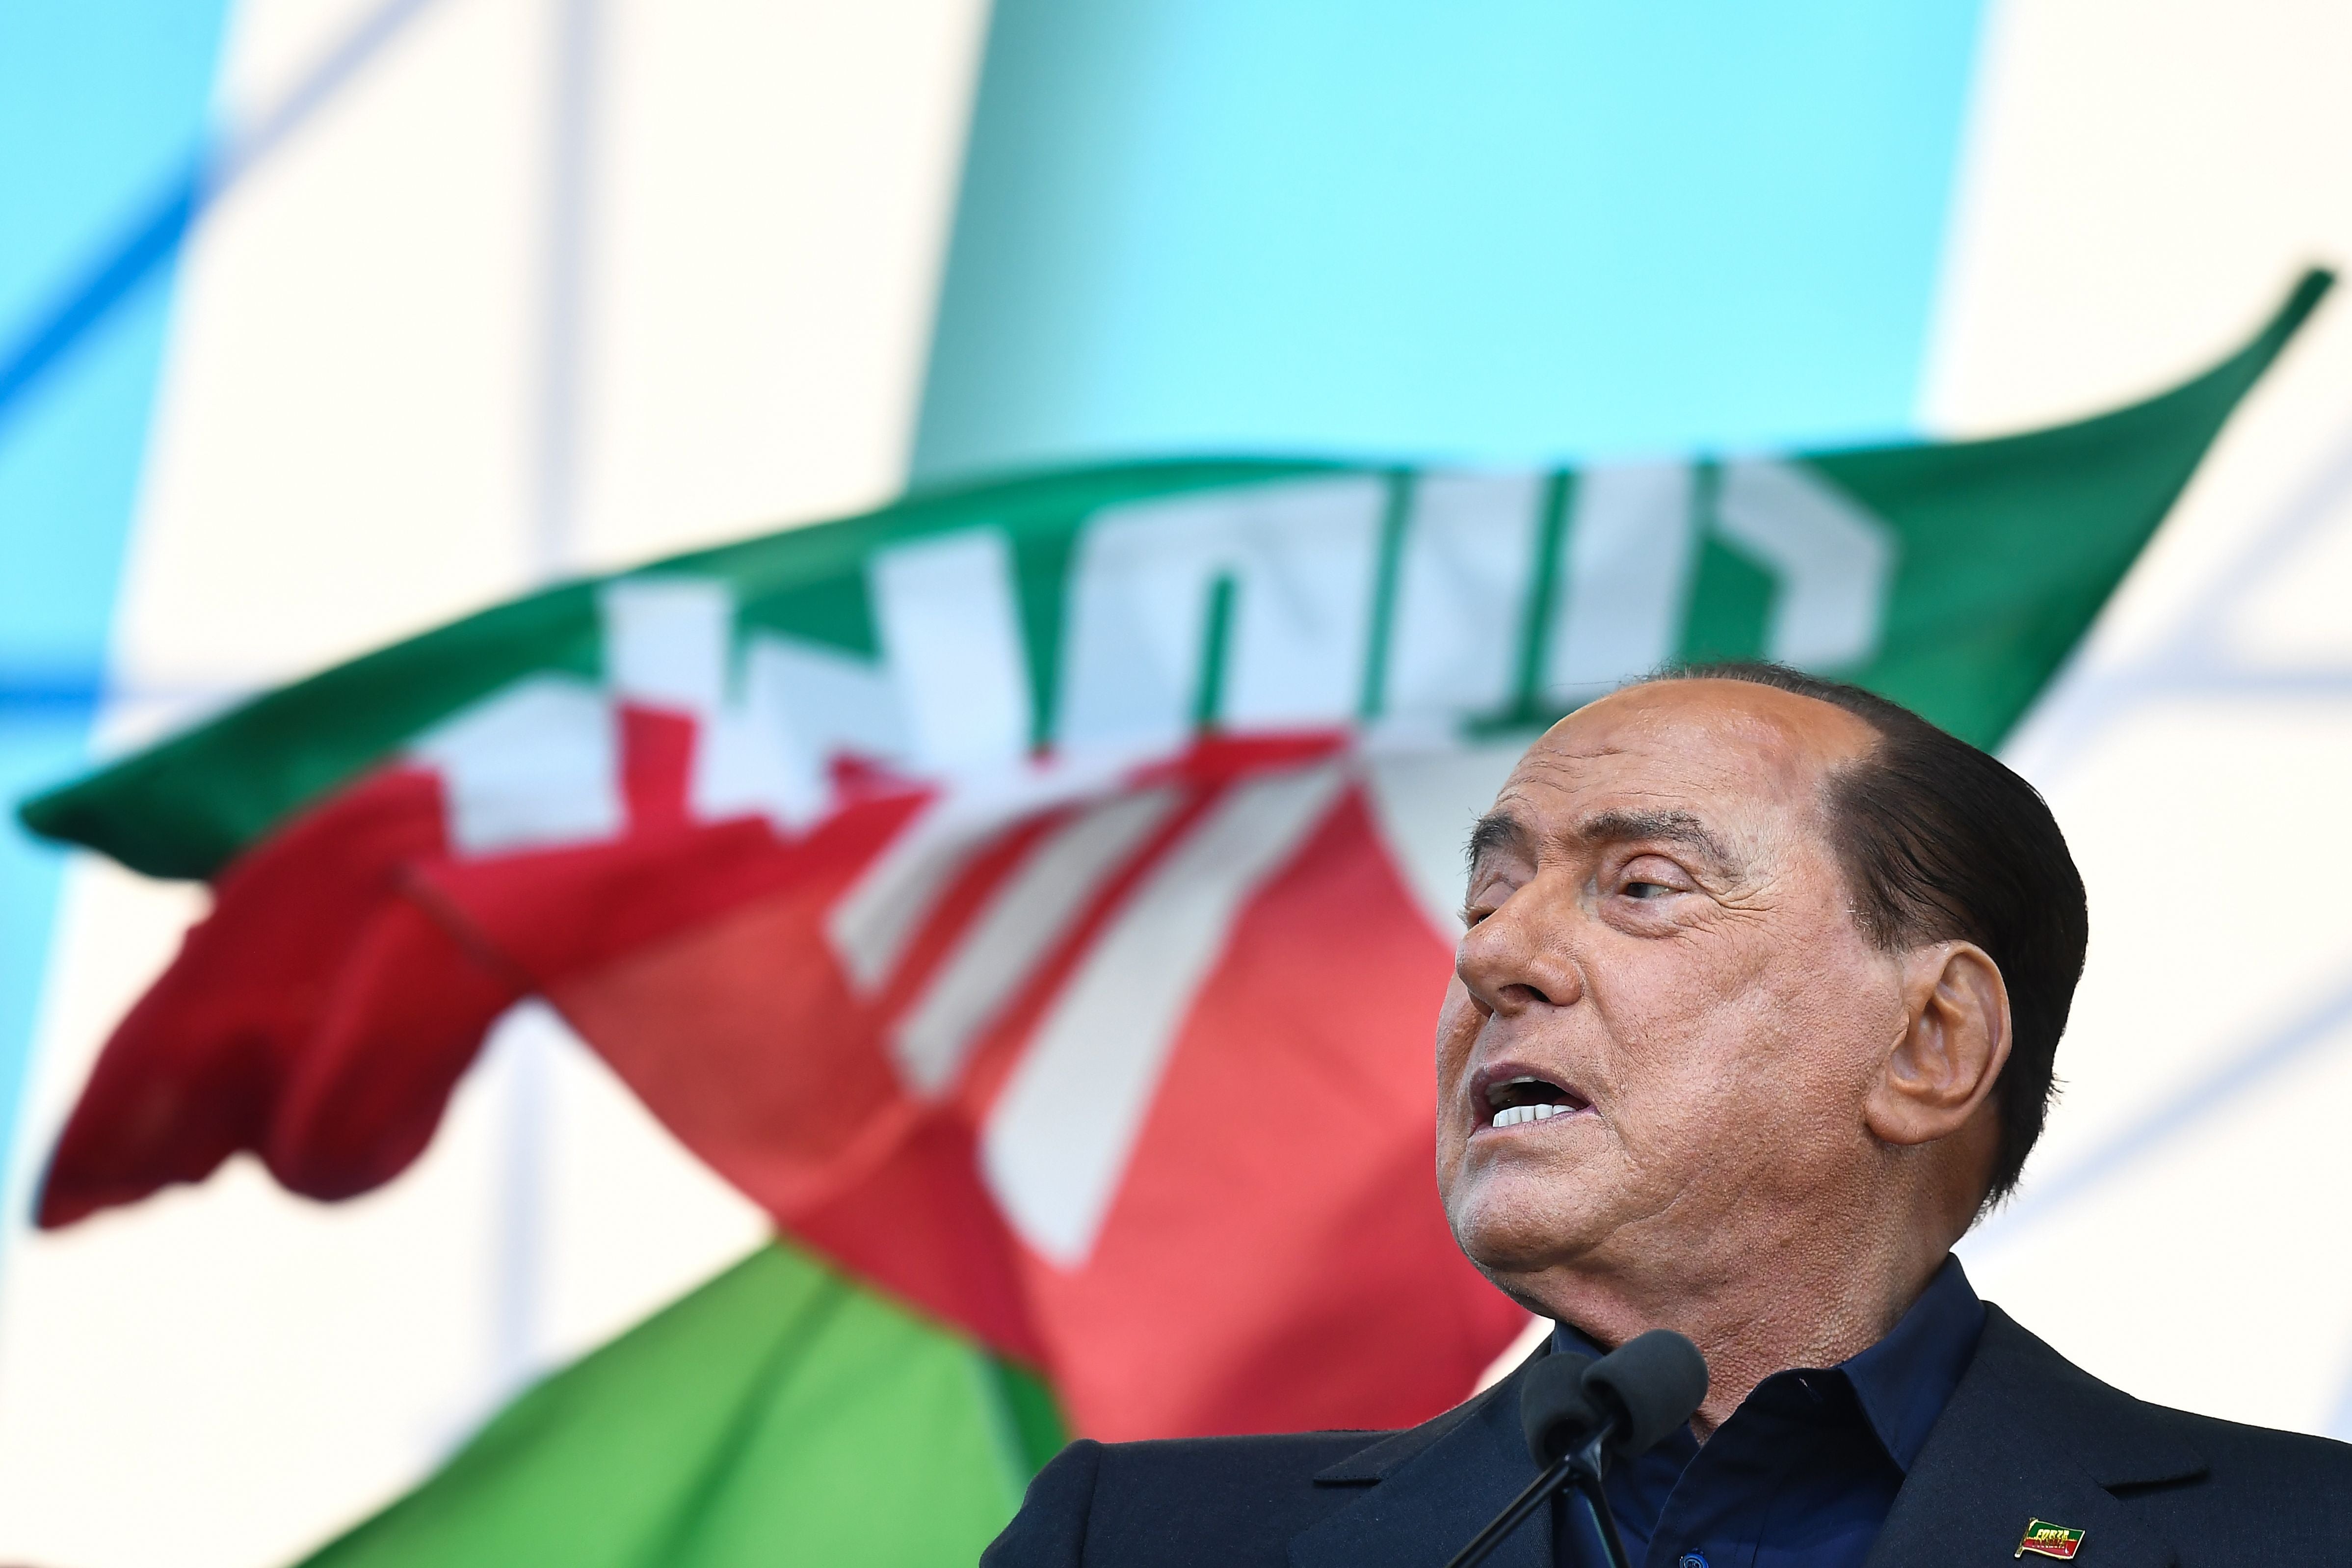 Mr Berlusconi